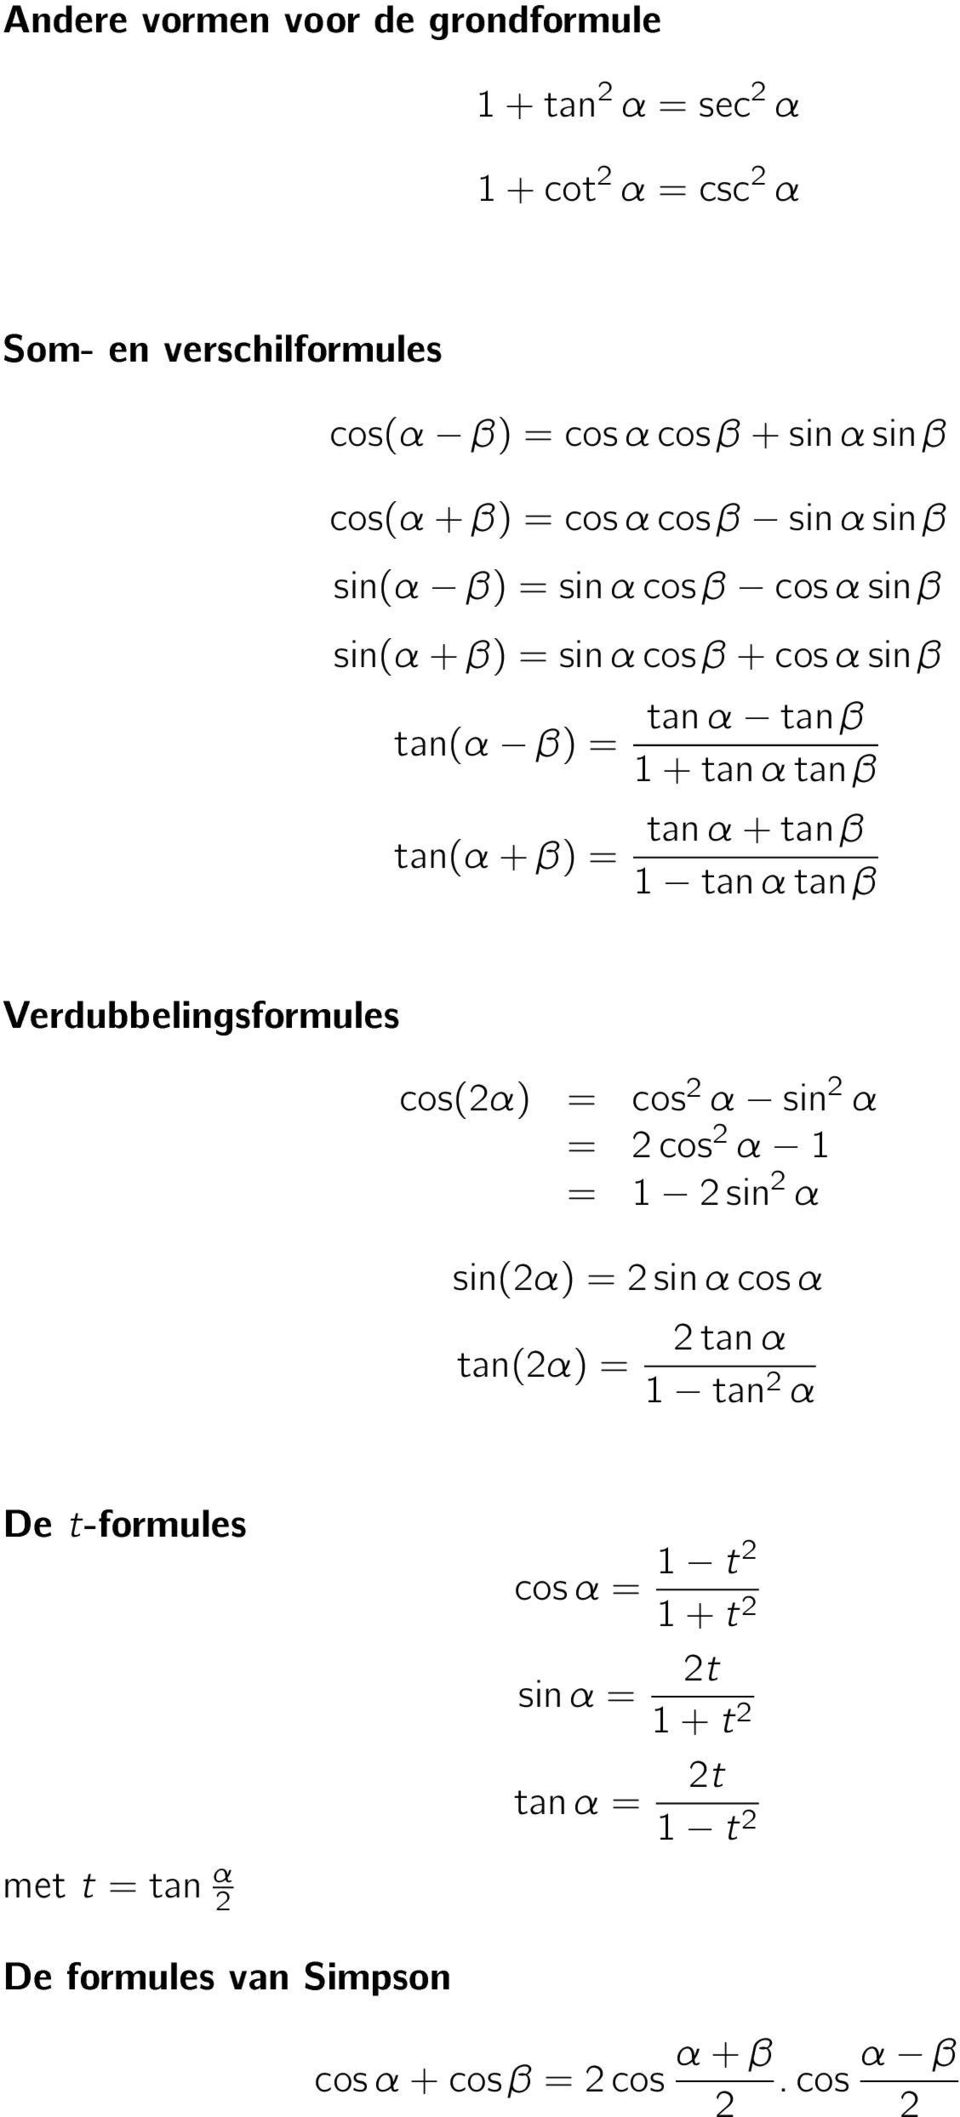 tan β tan α + tan β tan α tan β Verdubbelingsformules cos(2α) = cos 2 α sin 2 α = 2 cos 2 α = 2 sin 2 α sin(2α) = 2 sin α cos α tan(2α) = 2 tan α